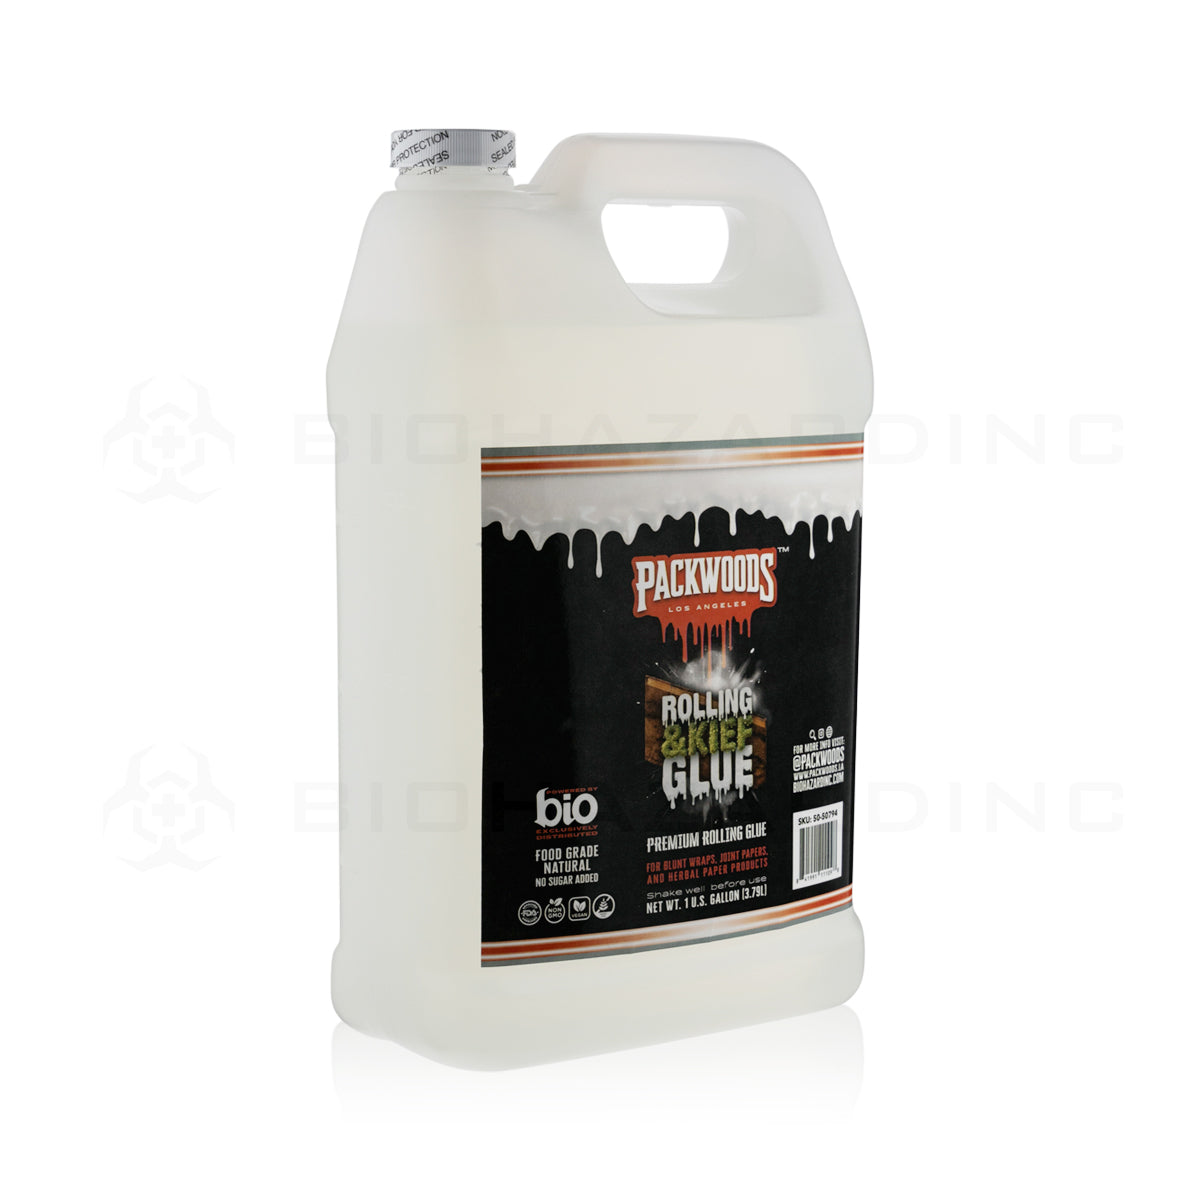 Packwoods™ x BIO™ | Blunt Rolling & Kief Glue | 1 Gallon Rolling Glue Biohazard Inc   